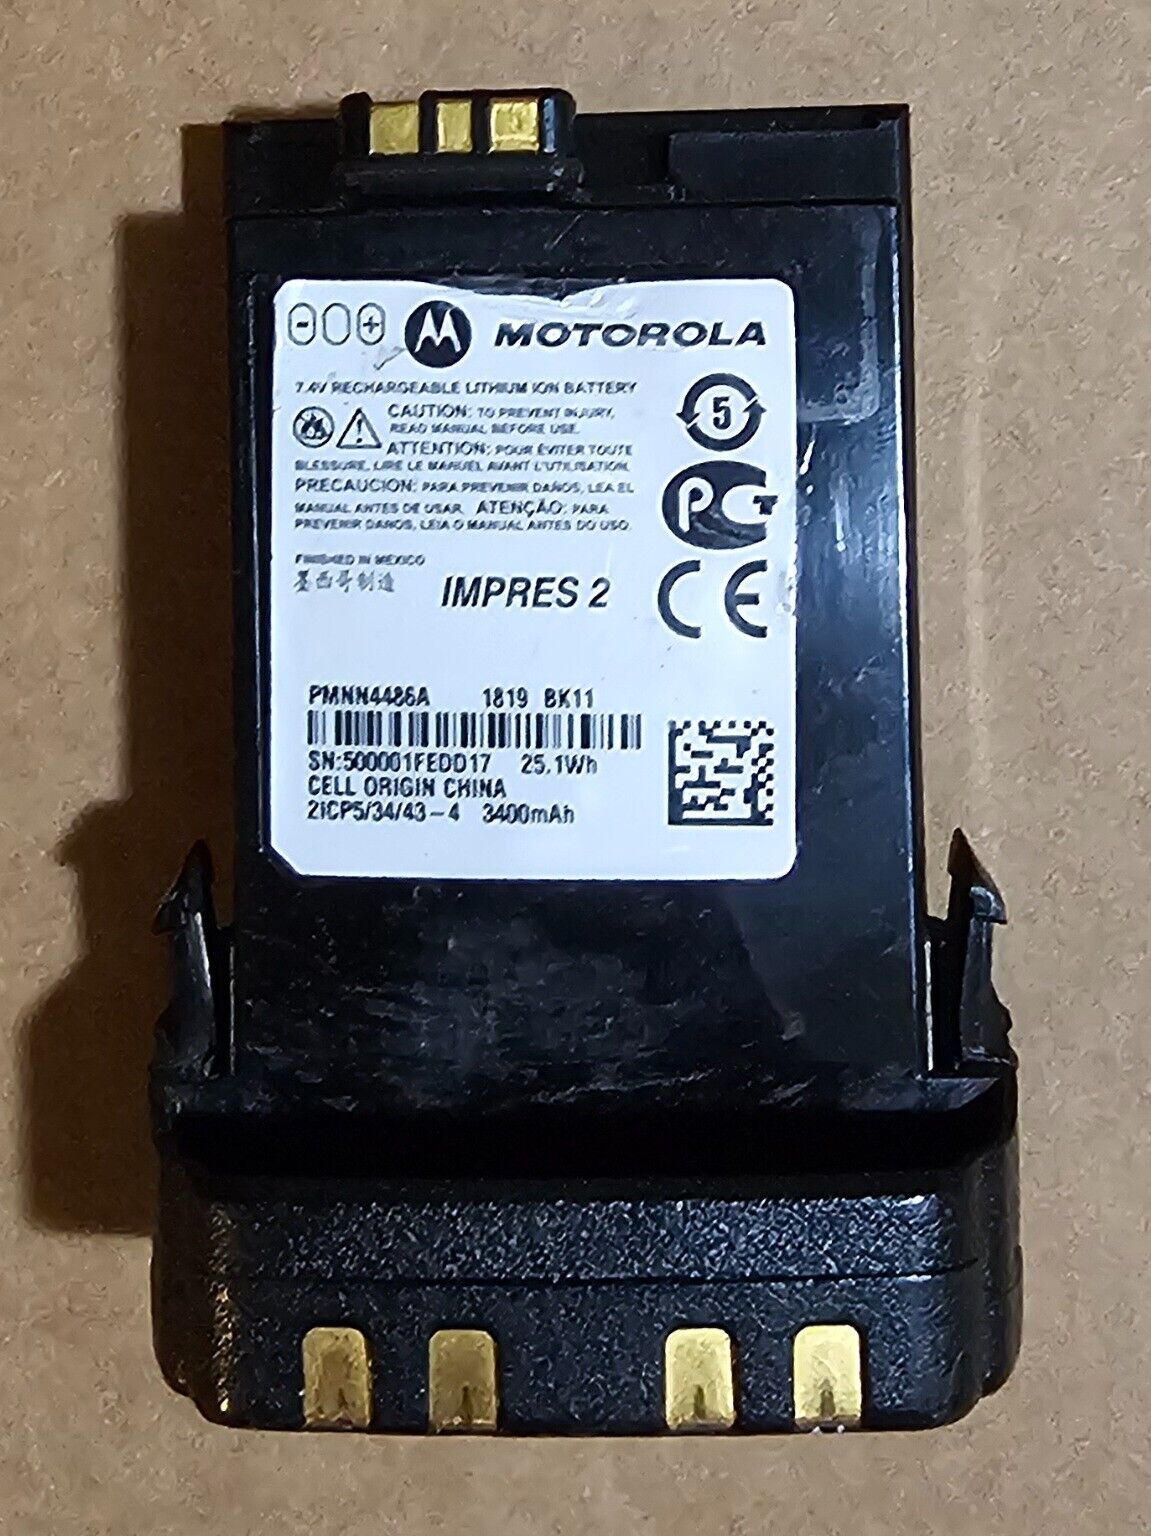 OEM Motorola PMNN4486A IMPRES 2 3400mAh Li-Ion Rugged 2 way Radio Battery